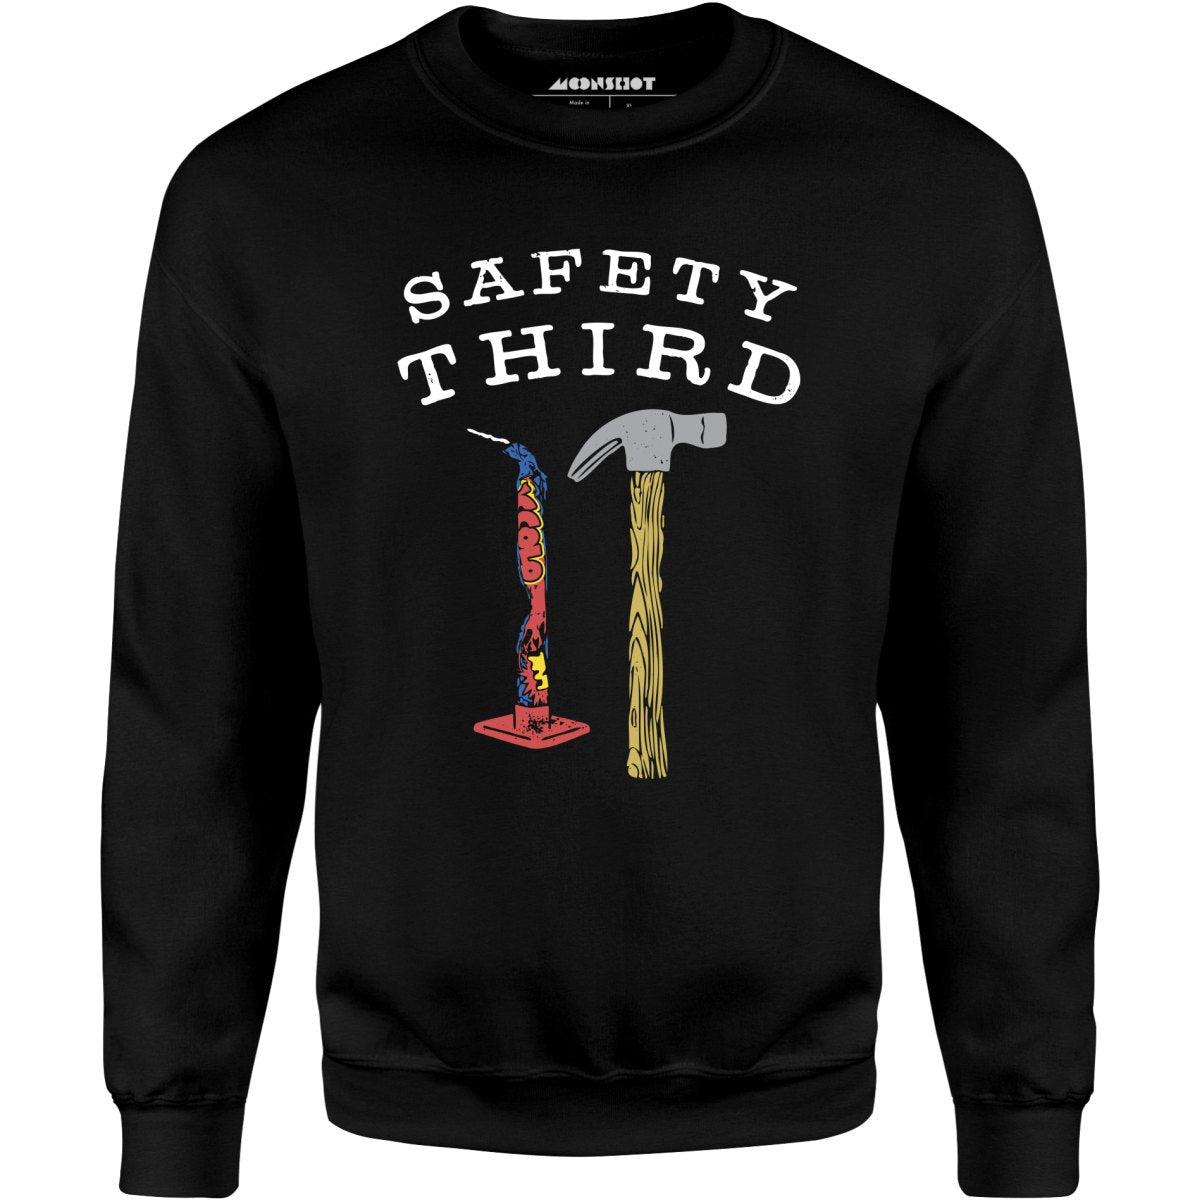 Safety Third v3 - Unisex Sweatshirt